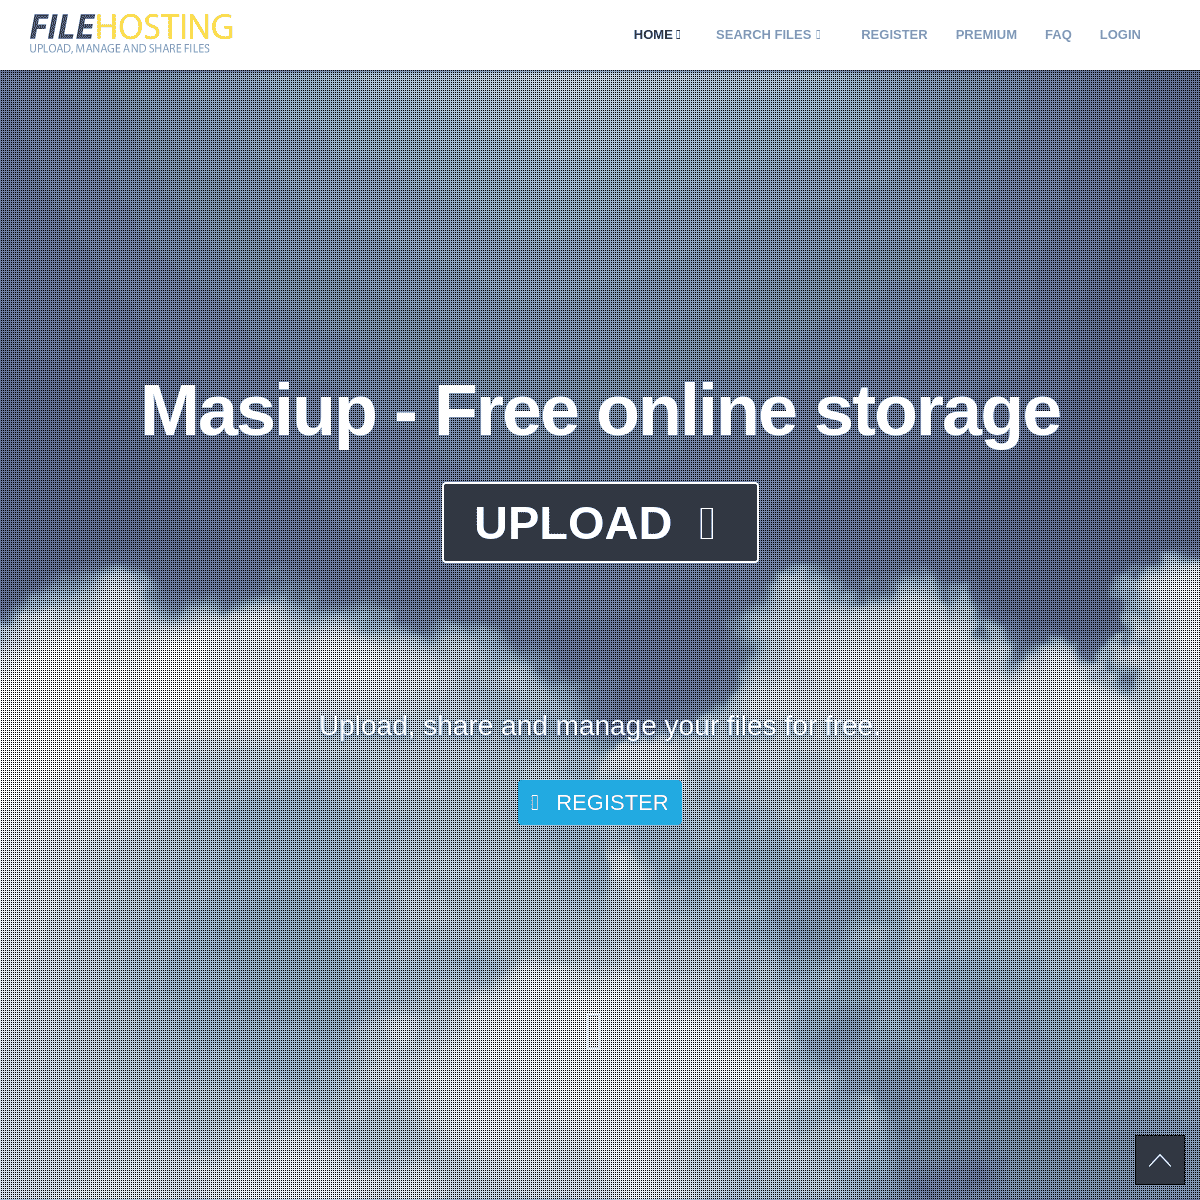 A complete backup of masiup.com